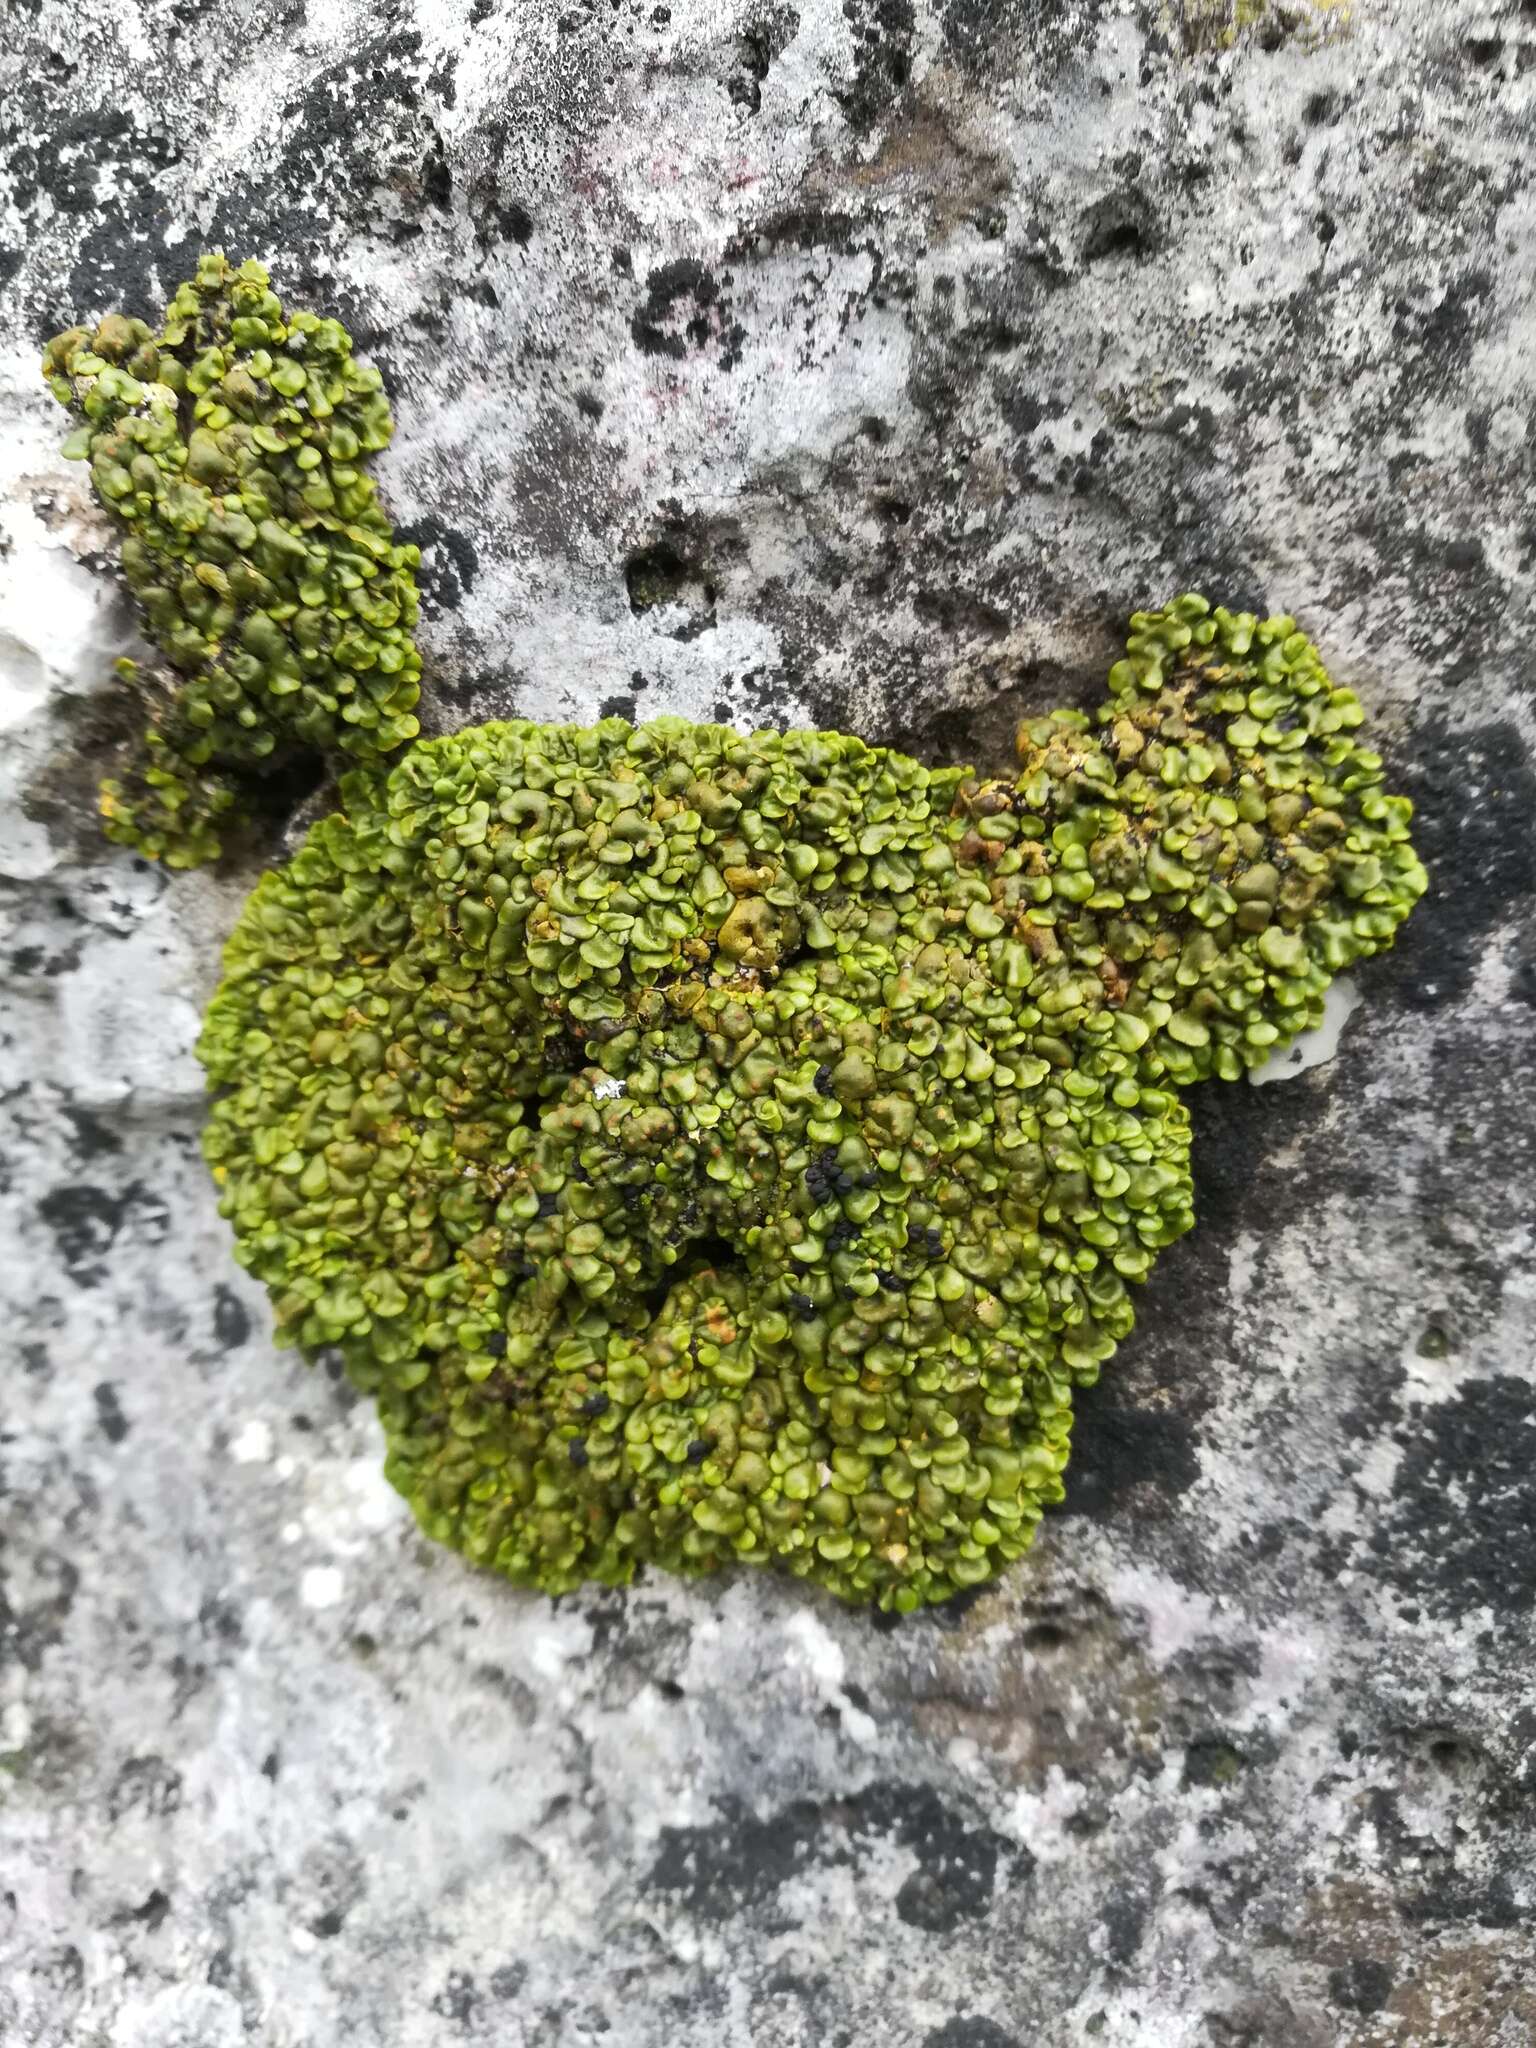 Image of Texas xanthopsorella lichen